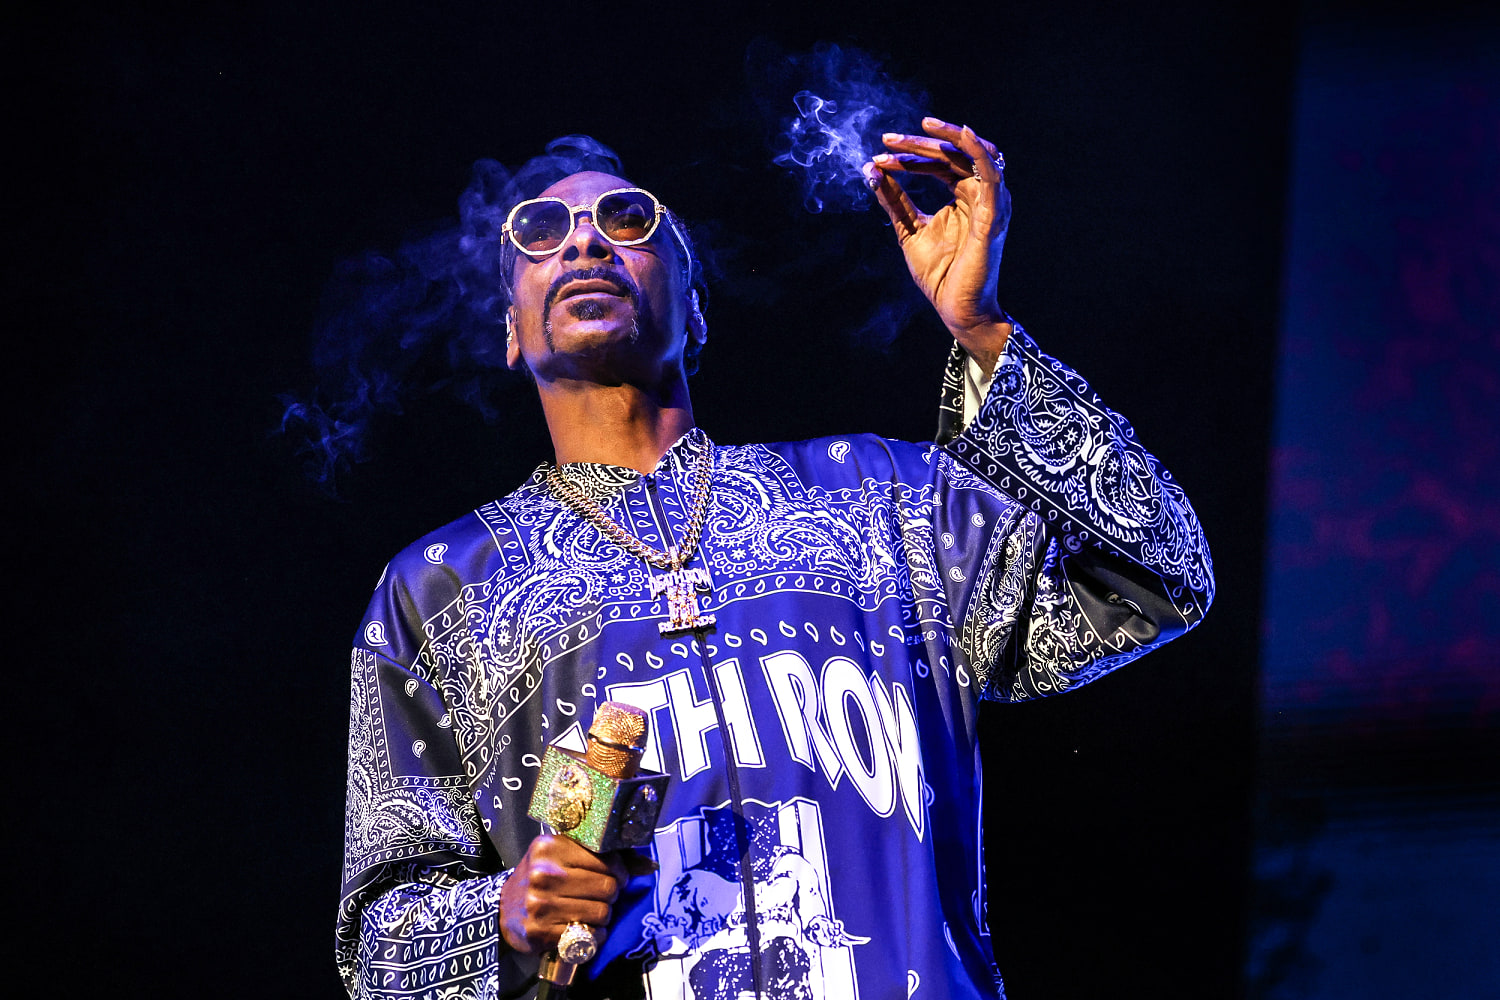 Snoop Dogg says he’s giving up smoking after years of marijuana use